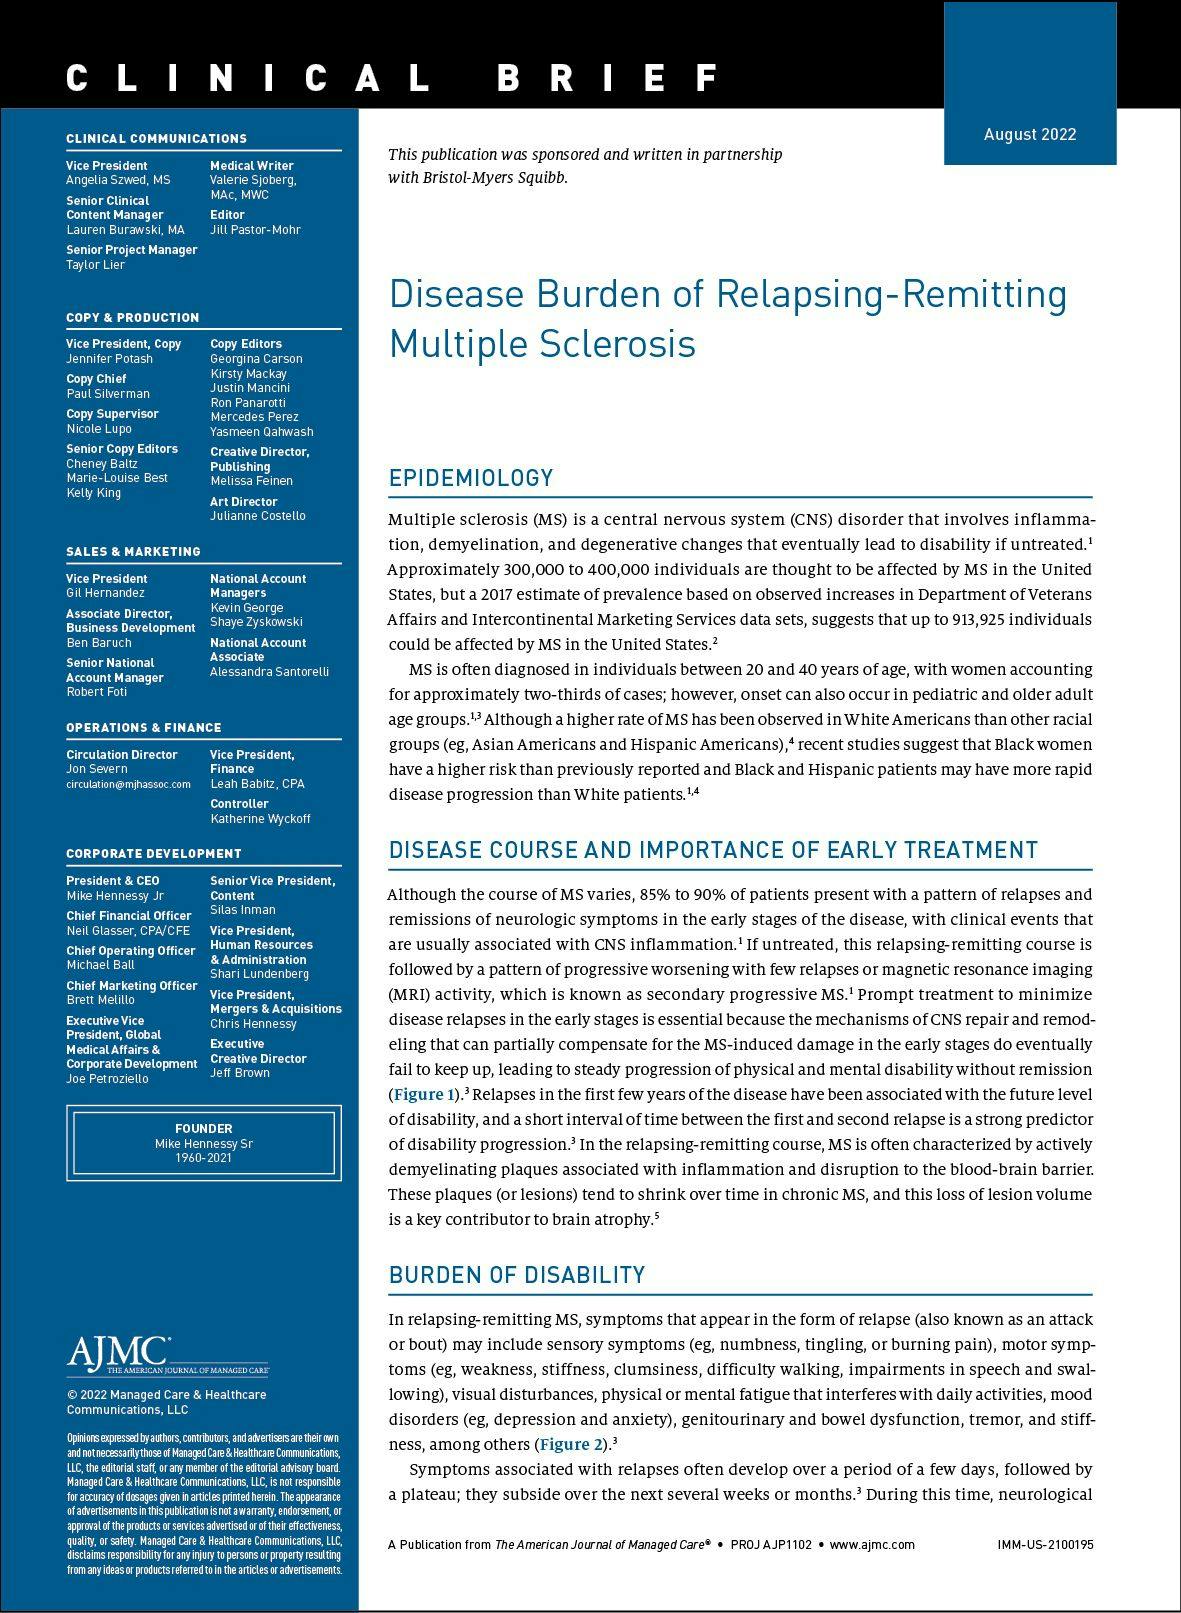 Disease Burden of Relapsing-Remitting Multiple Sclerosis